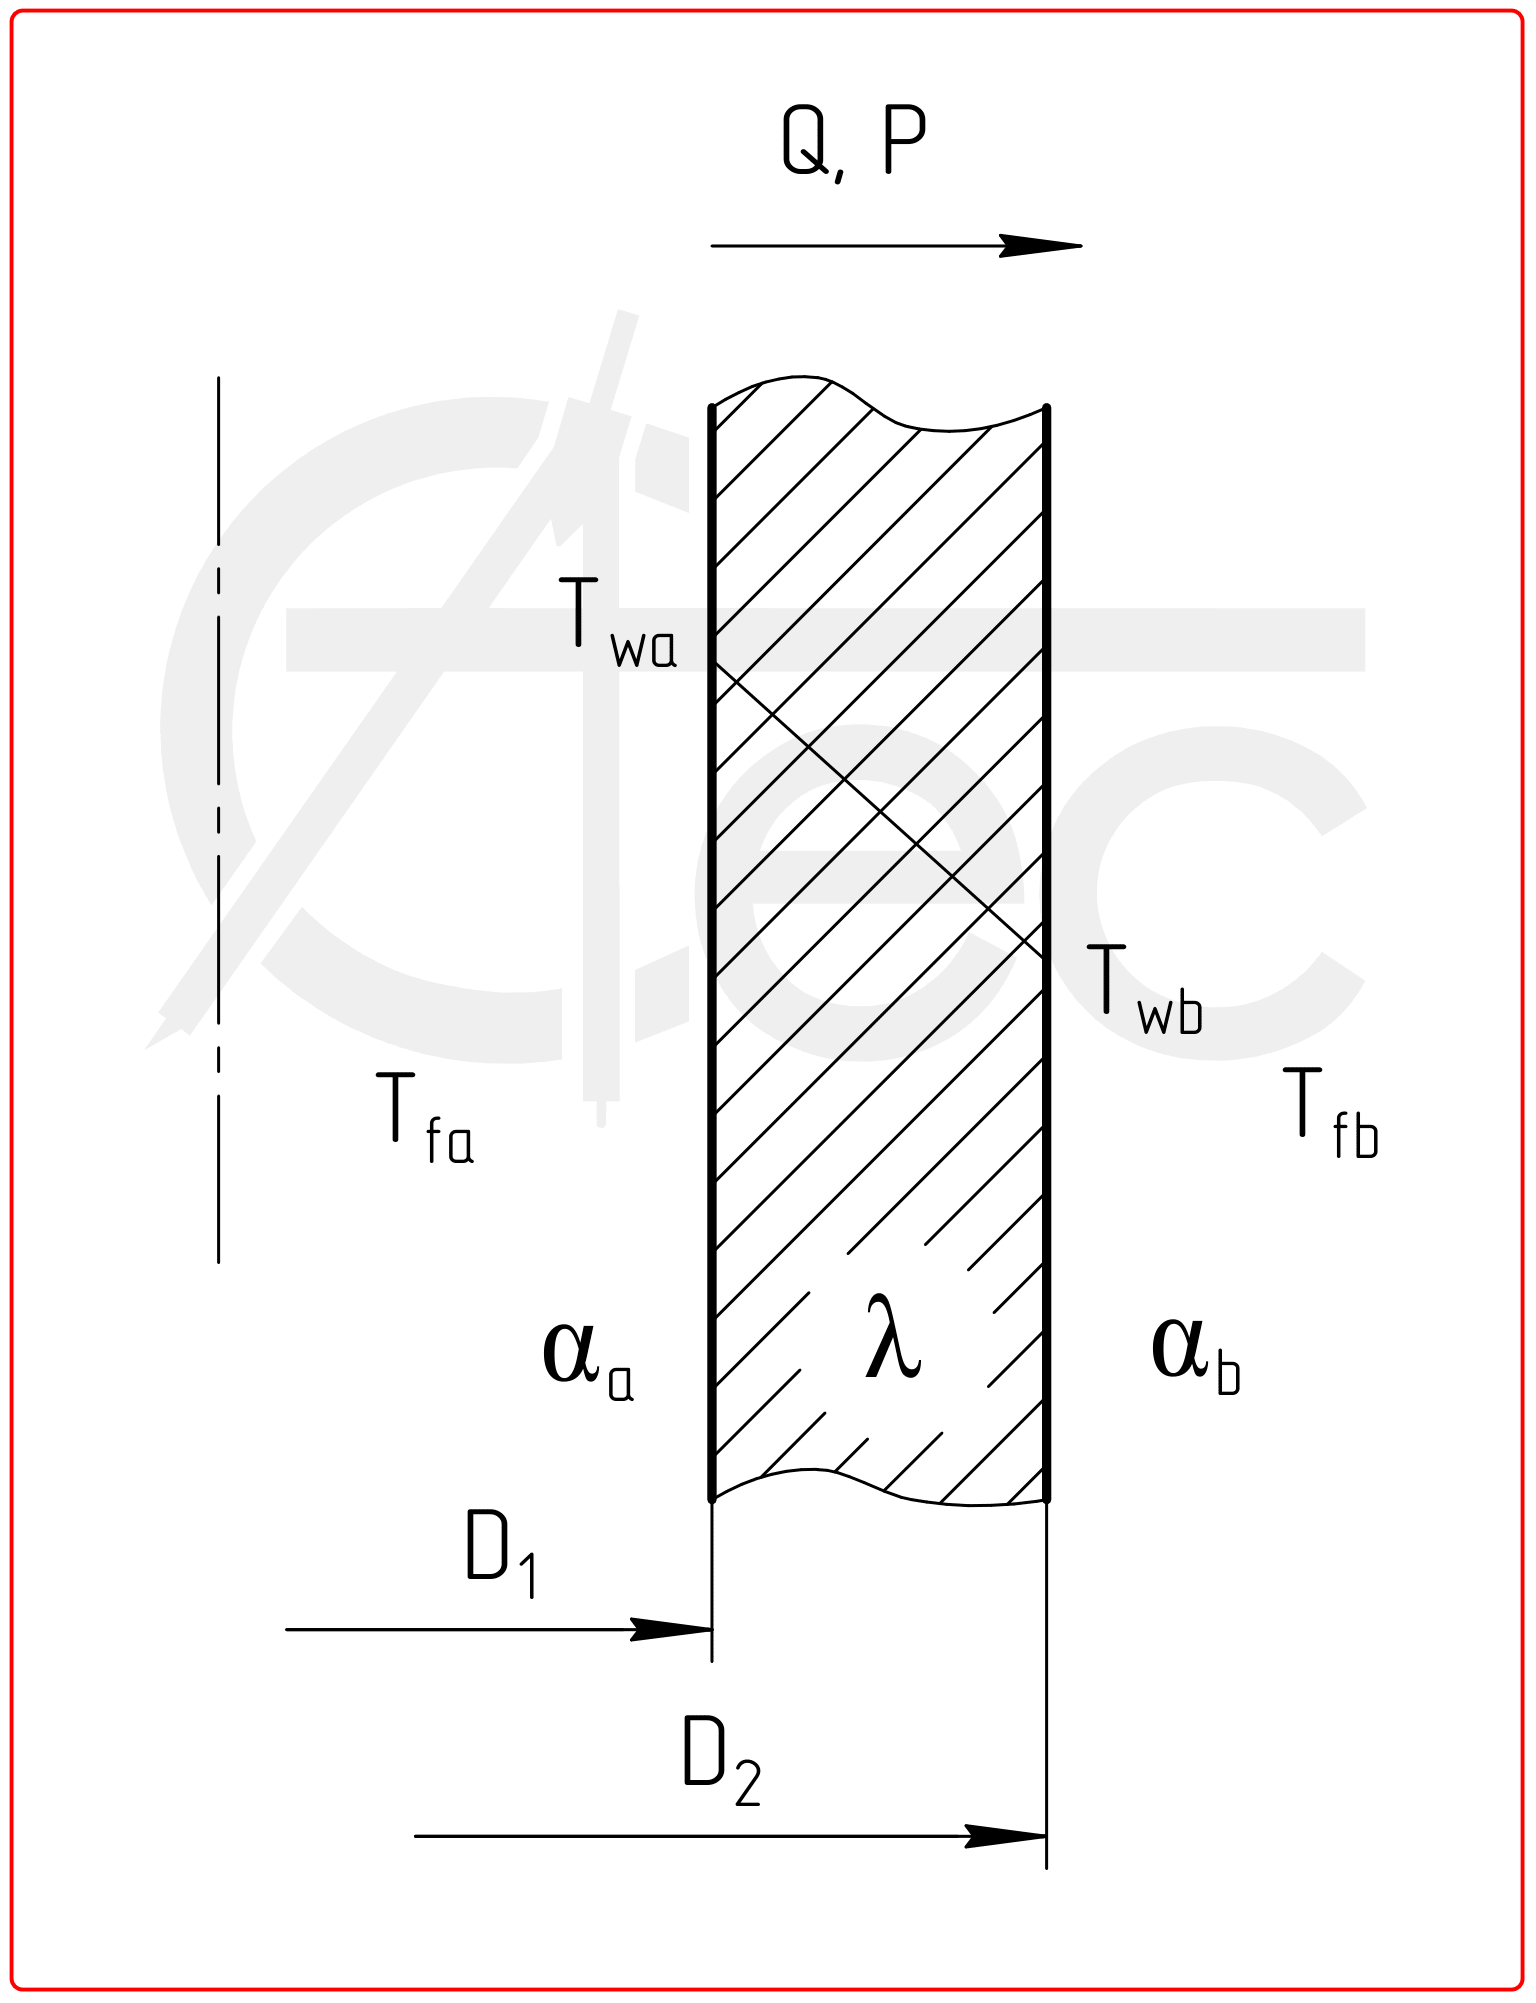 Heat transfer throw tube wall calculation